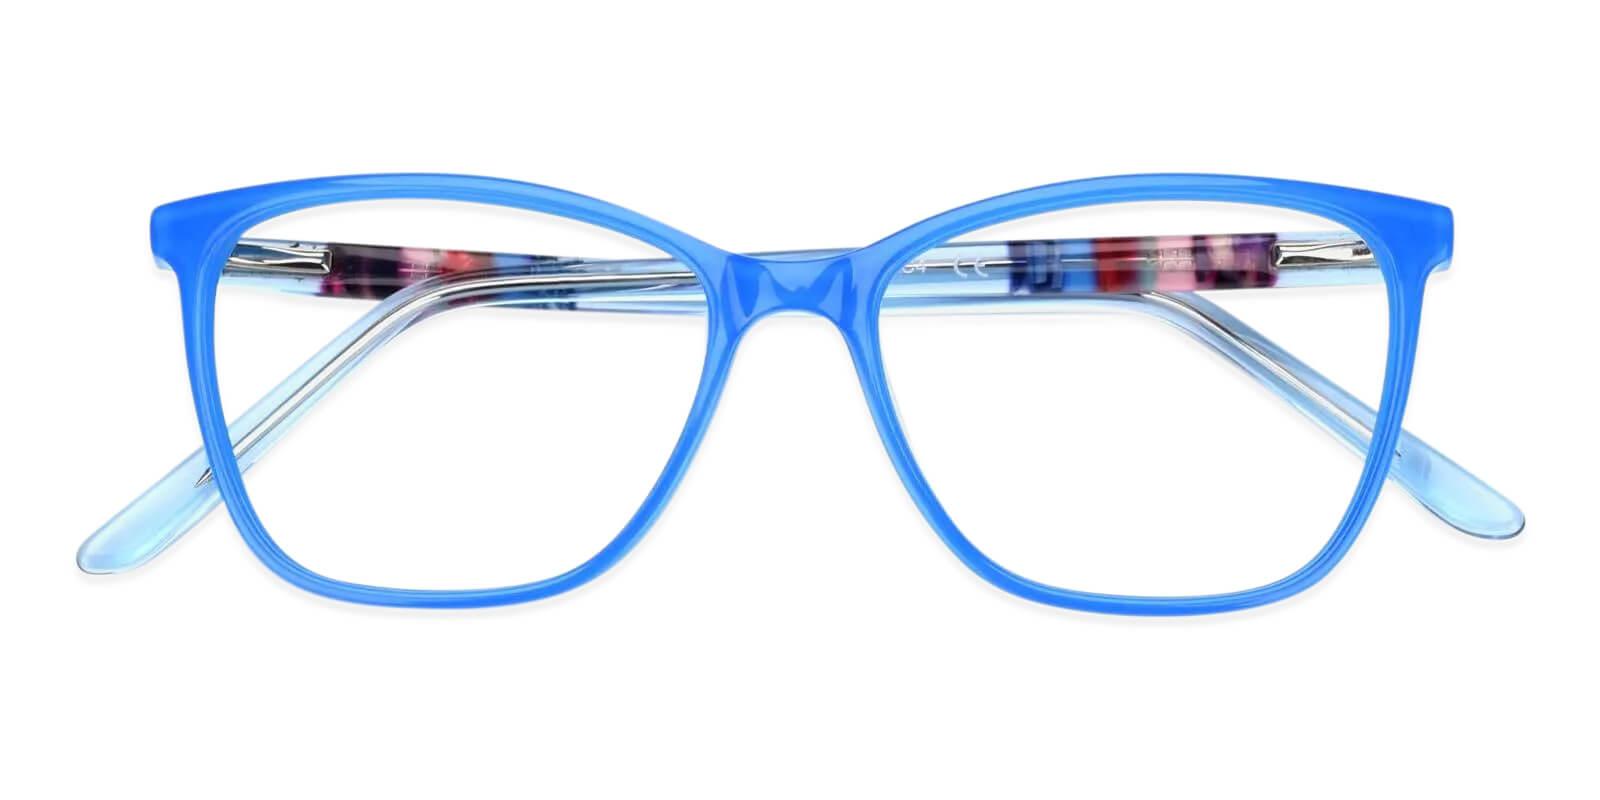 Mitchell Blue Acetate Eyeglasses , Fashion , SpringHinges , UniversalBridgeFit Frames from ABBE Glasses